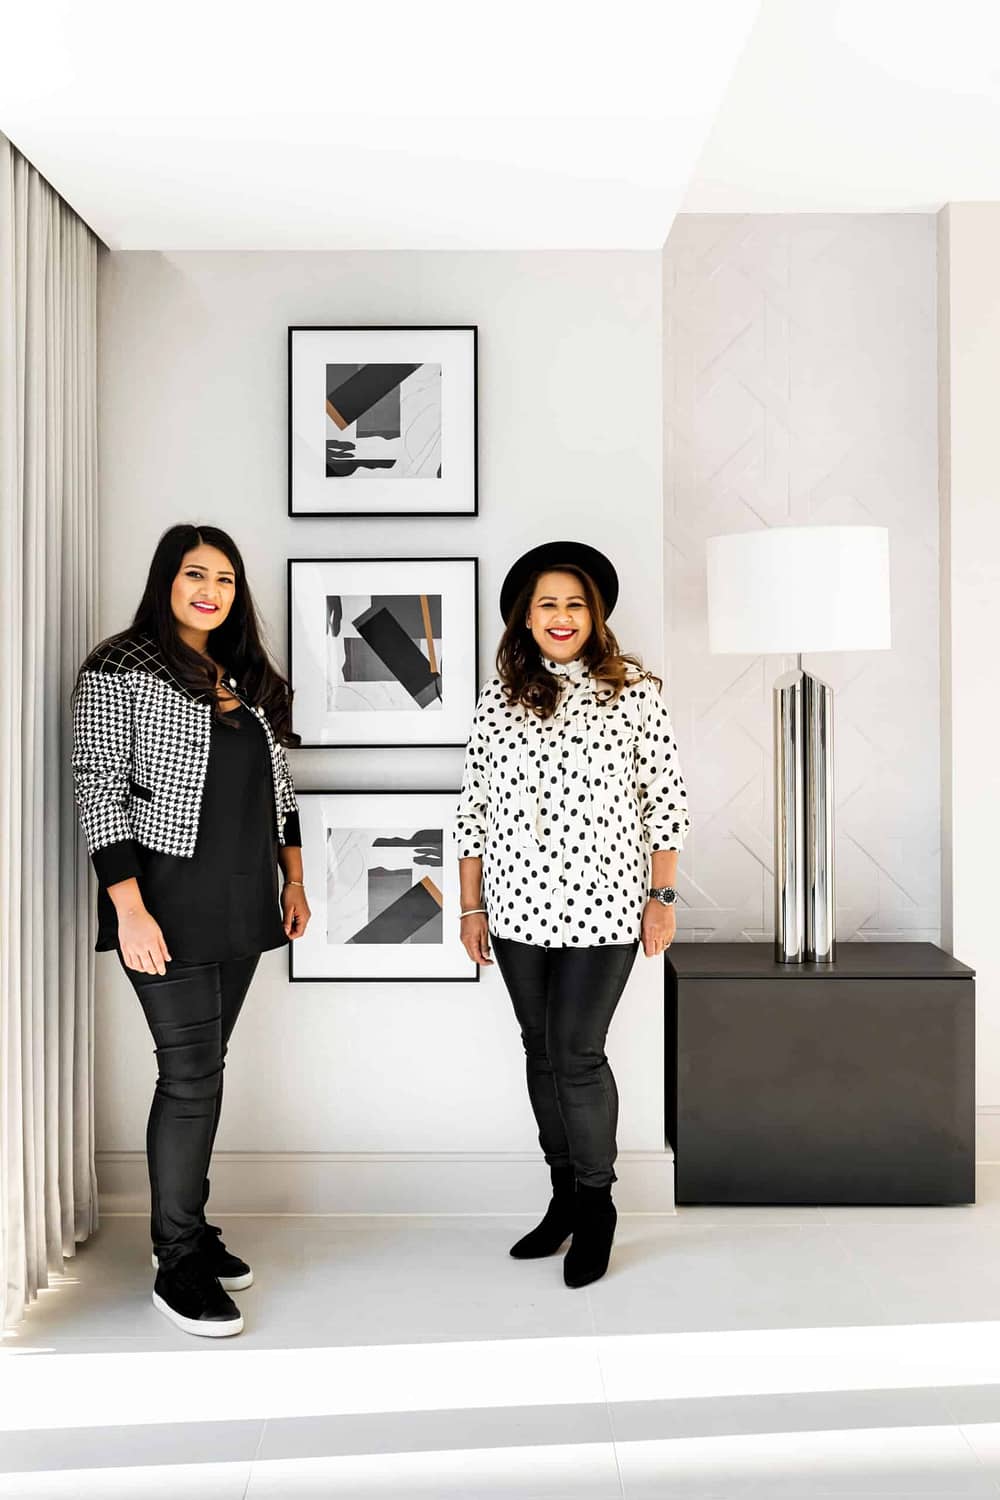 Vandana and Megha, our interior designers in Totteridge